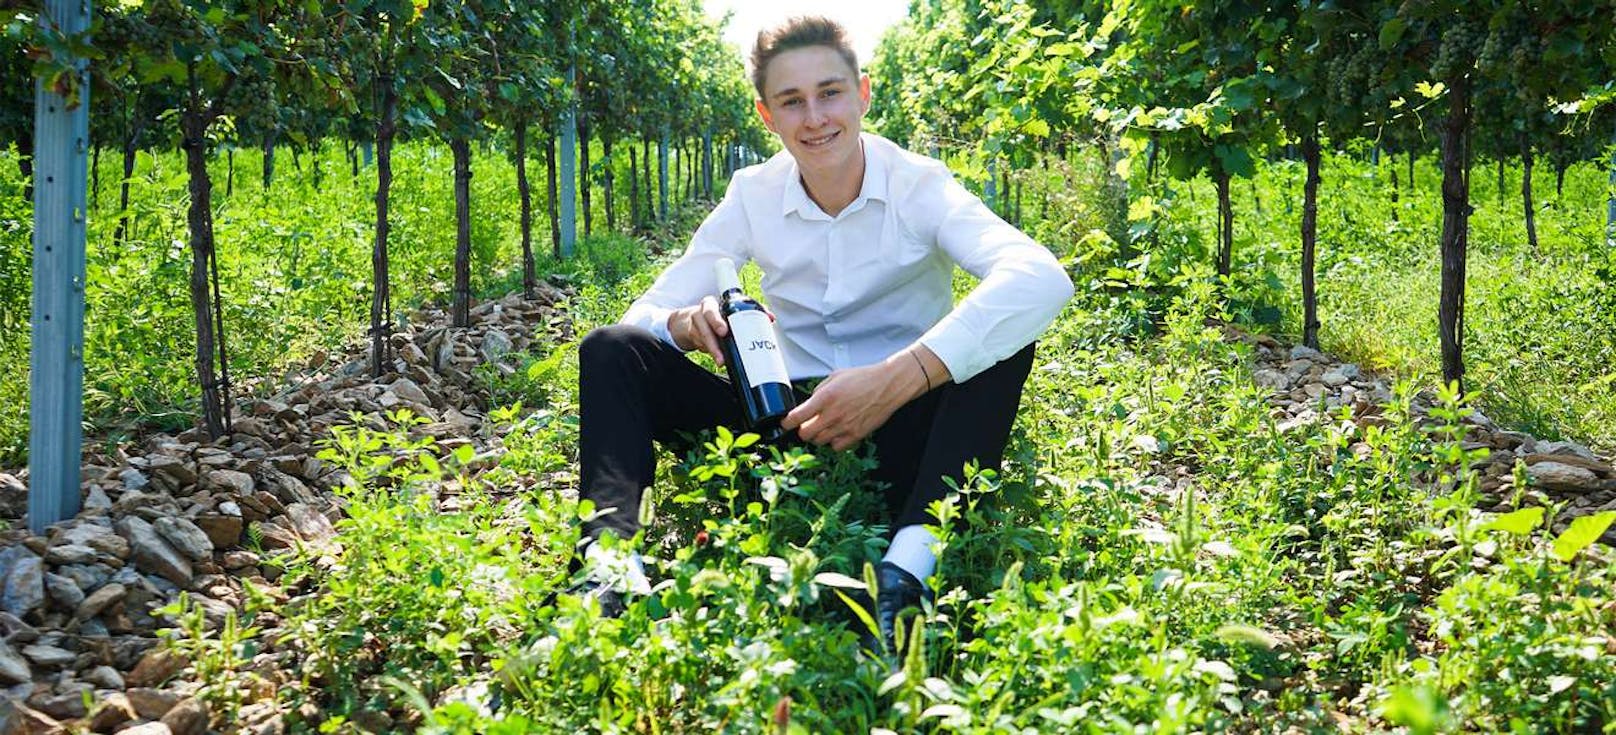 Leo Hillingers Sohn macht eigenen Wein